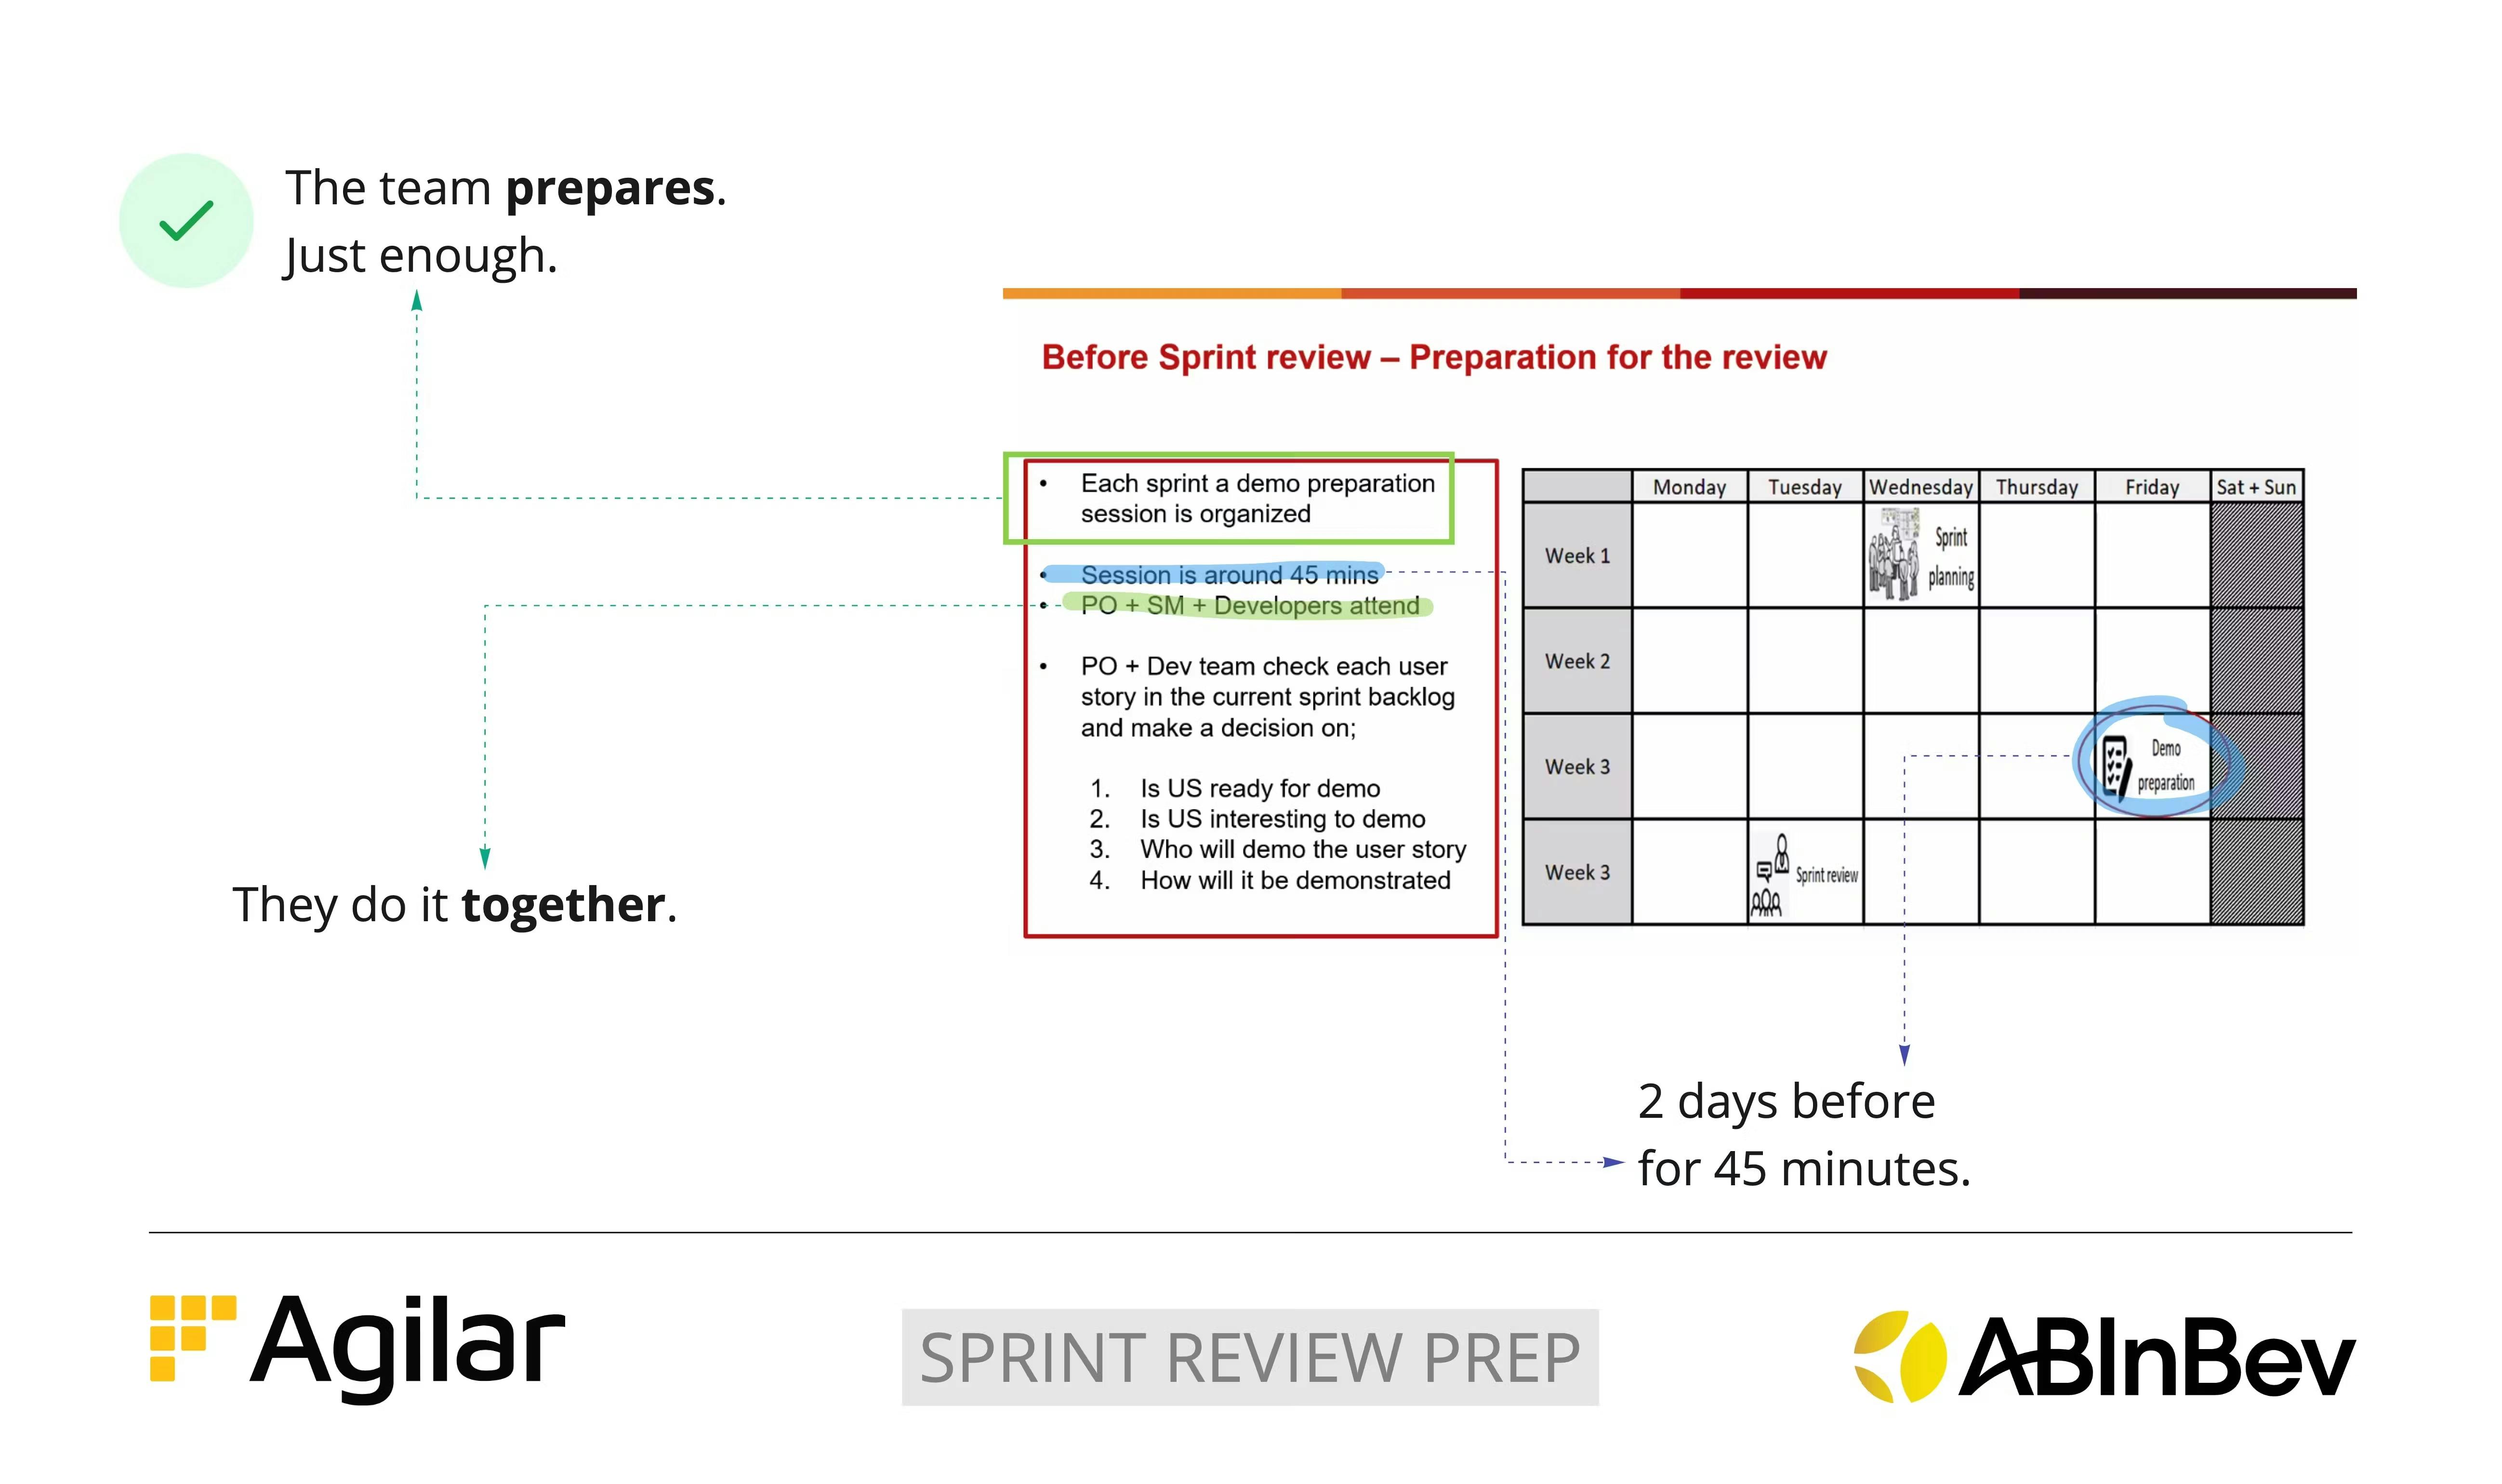 Simple agenda of how a team prepared their Sprint Review.